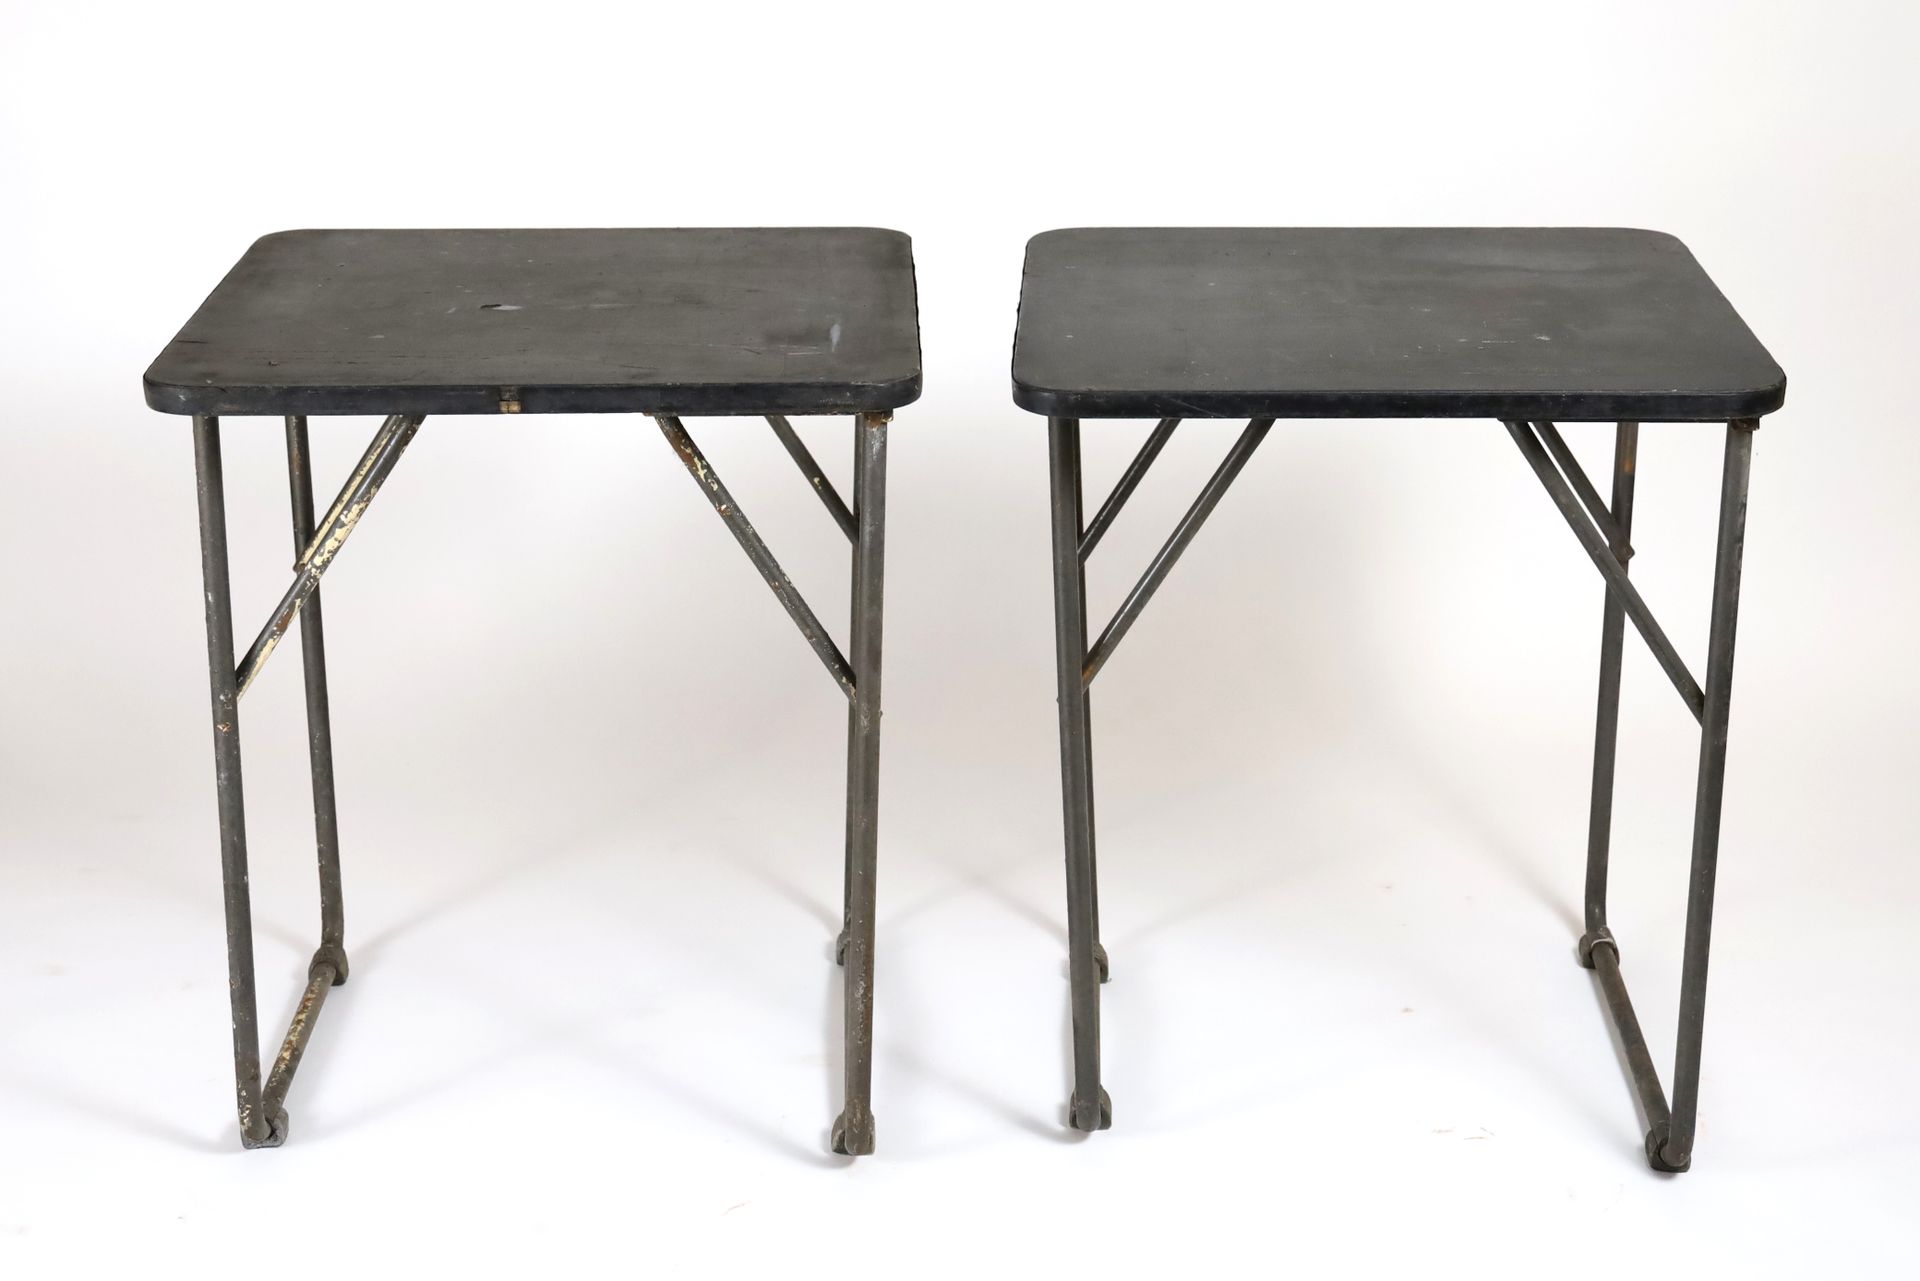 Null CGT法国1962年--TUBAUTOT公司的两张黑漆金属桥面折叠桌--高70厘米，宽60厘米，长60厘米（磨损，状态）。